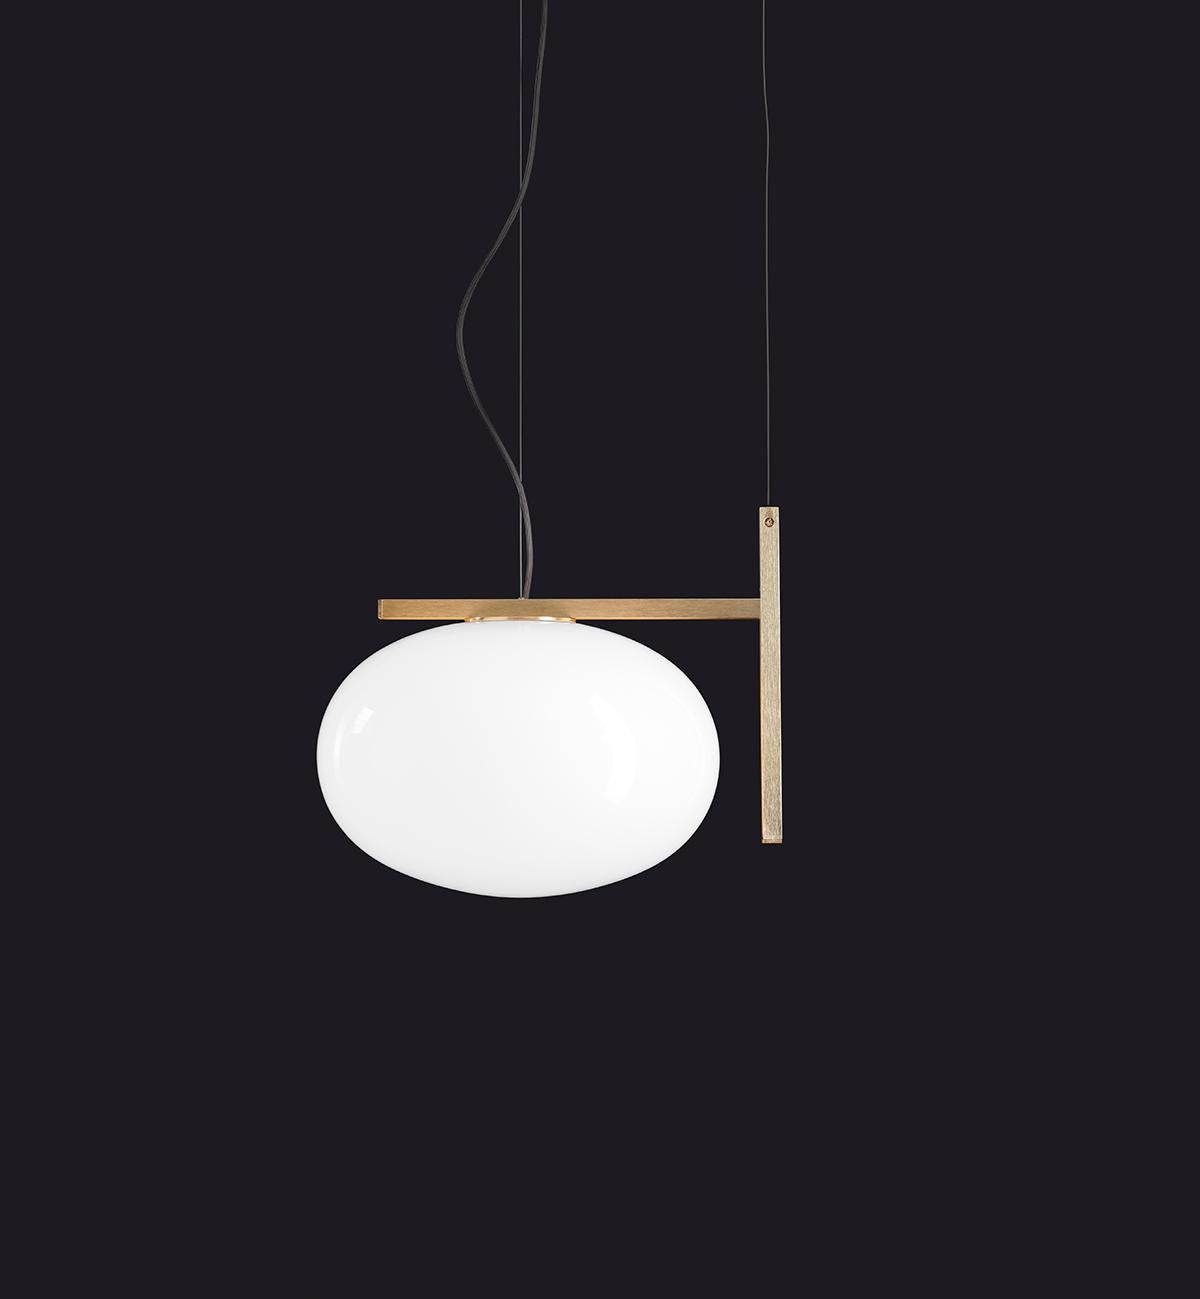 Italian Mariana Pellegrino Soto Suspension Lamp 'Alba' One Arm Brass by Oluce For Sale